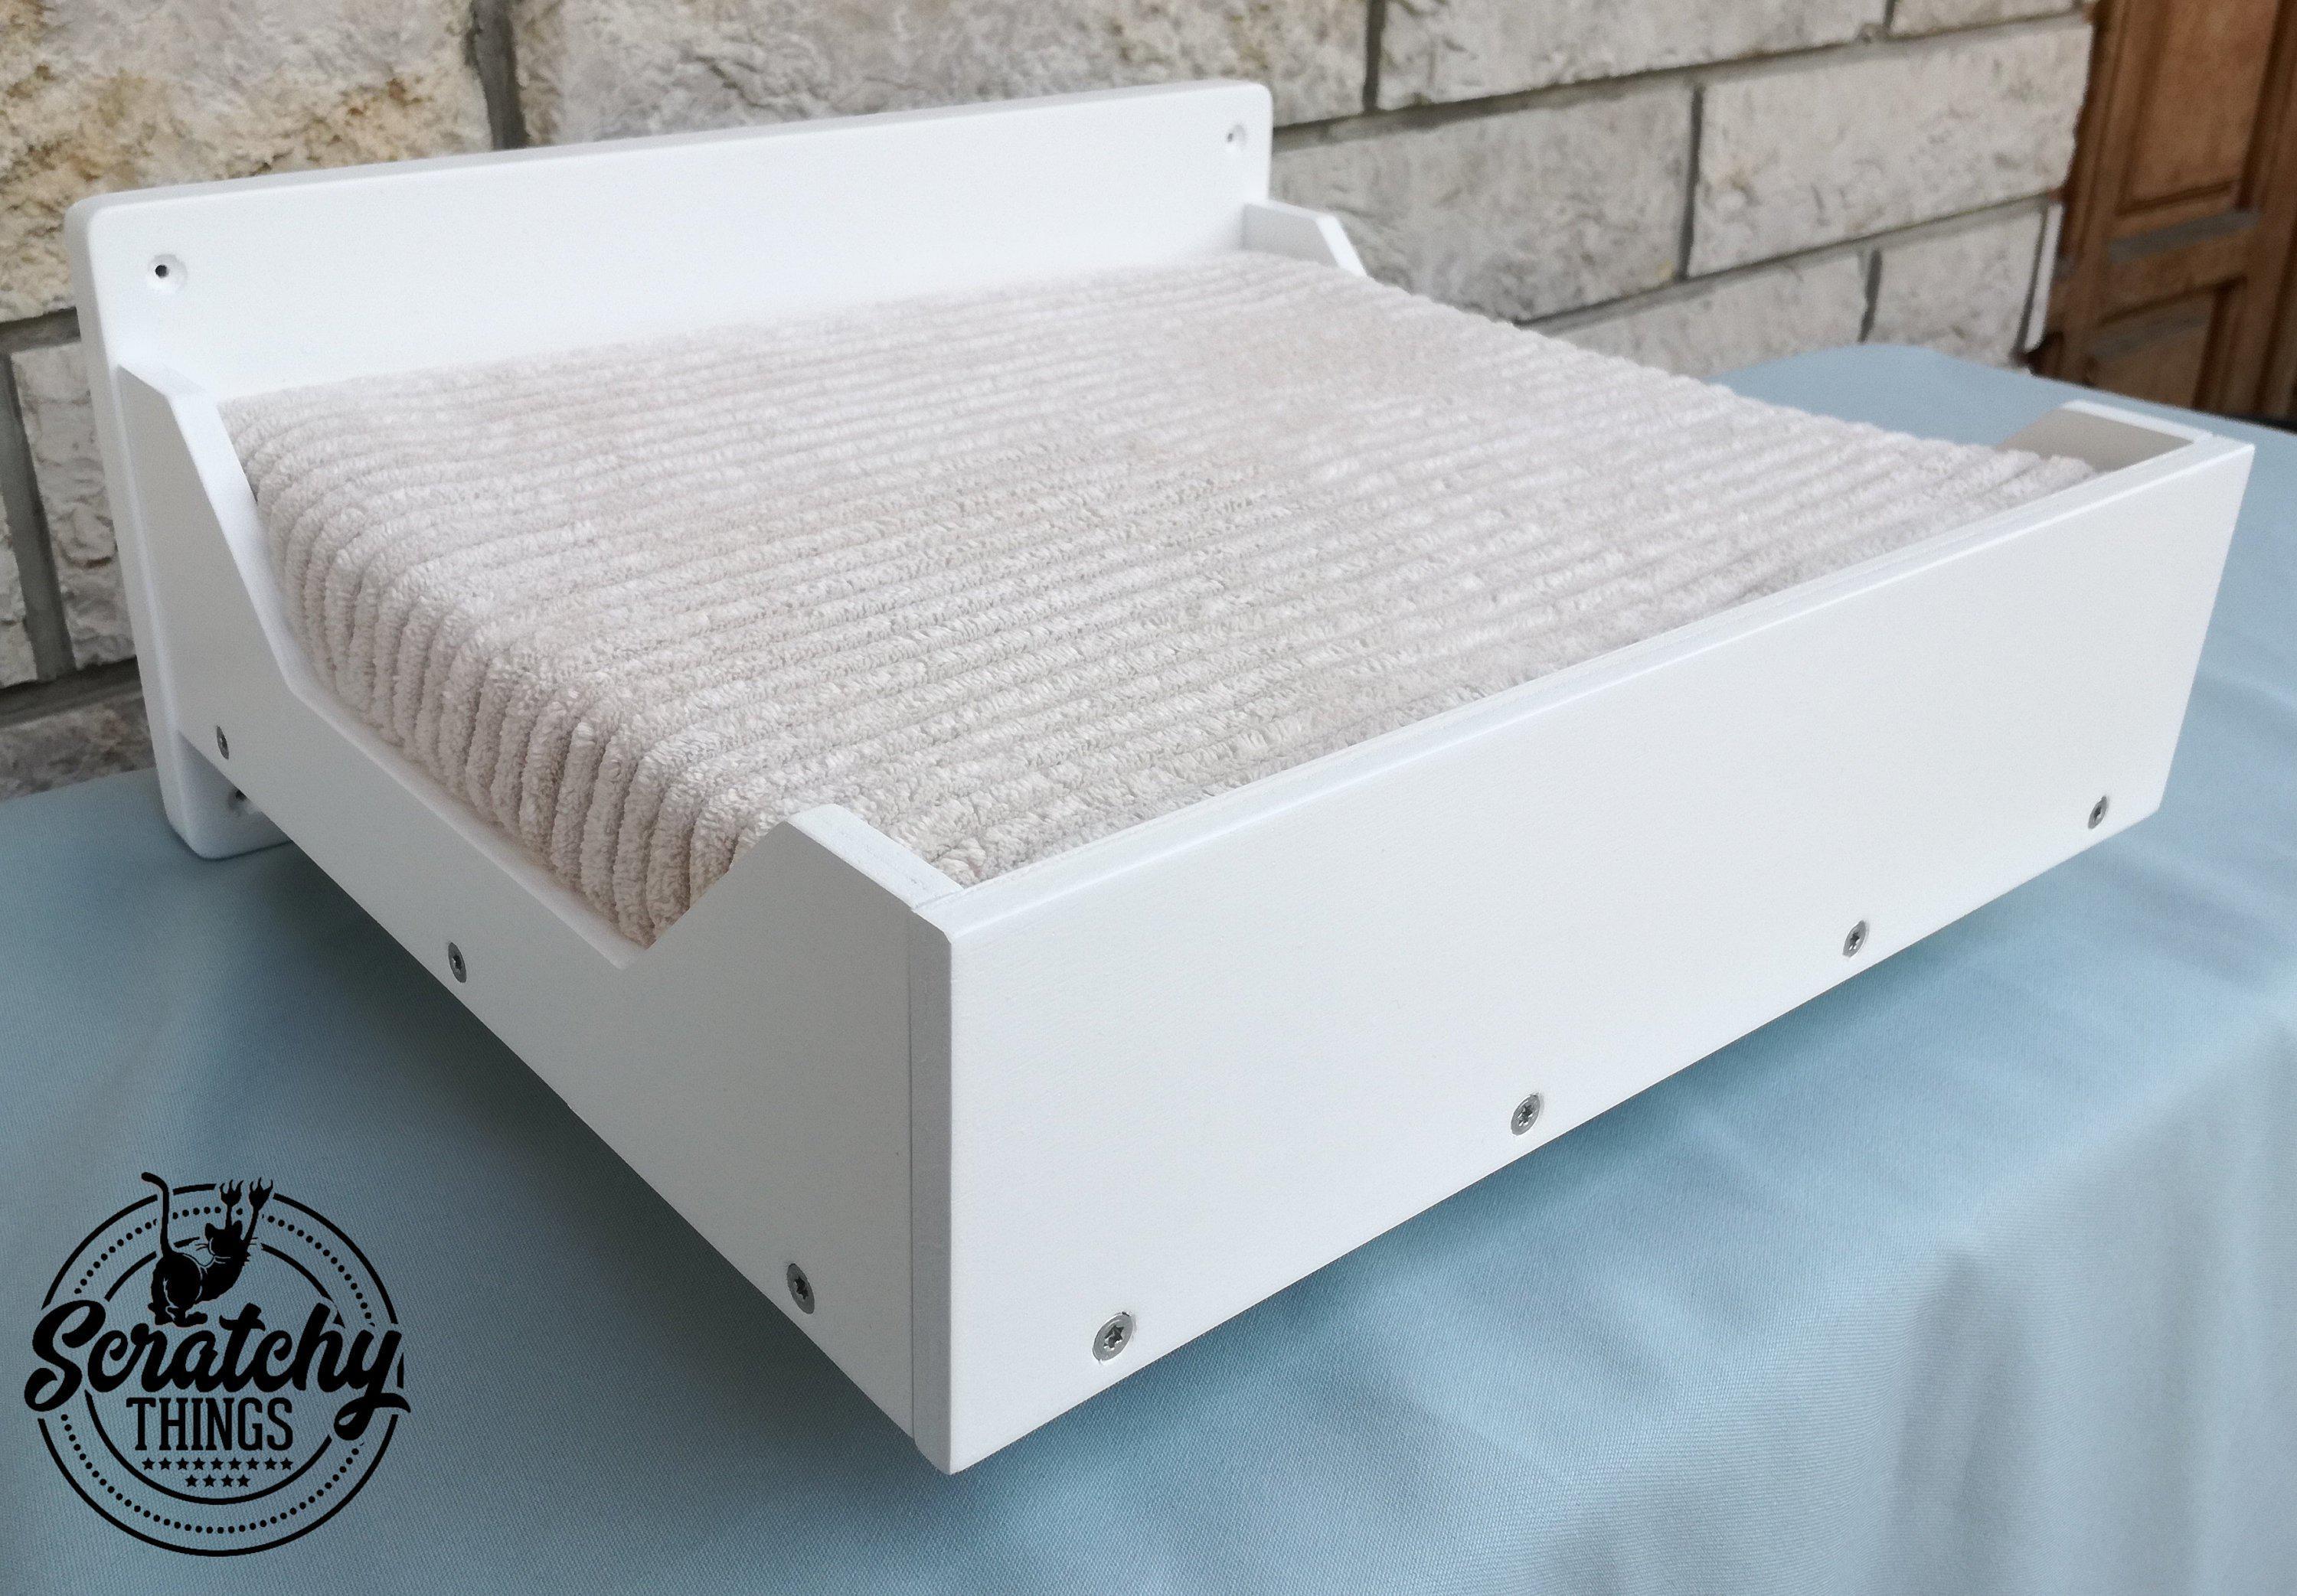 Cat Wall Shelf Bed - Wally Flat Plus - Scratchy Things Premium Pet Furniture